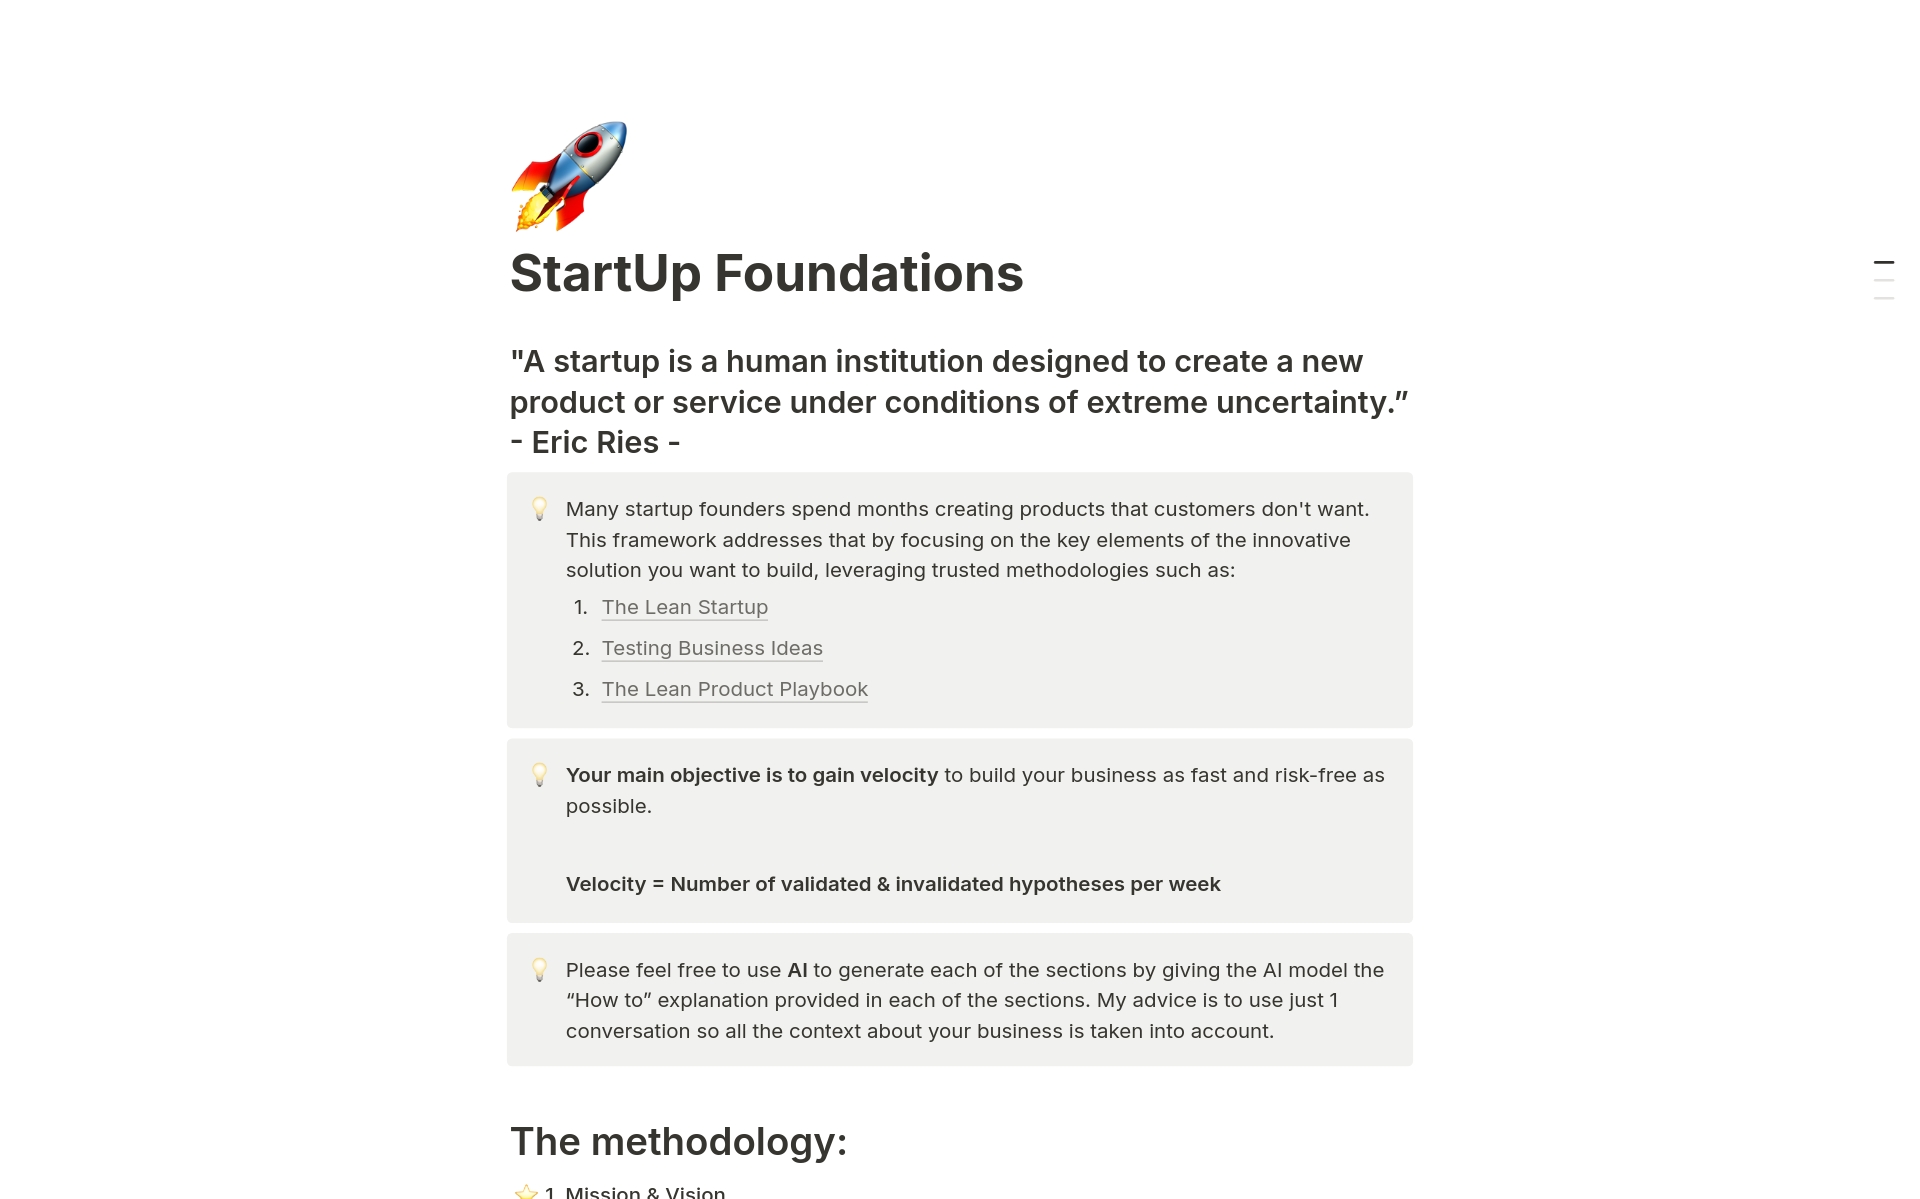 Vista previa de plantilla para StartUp Foundations